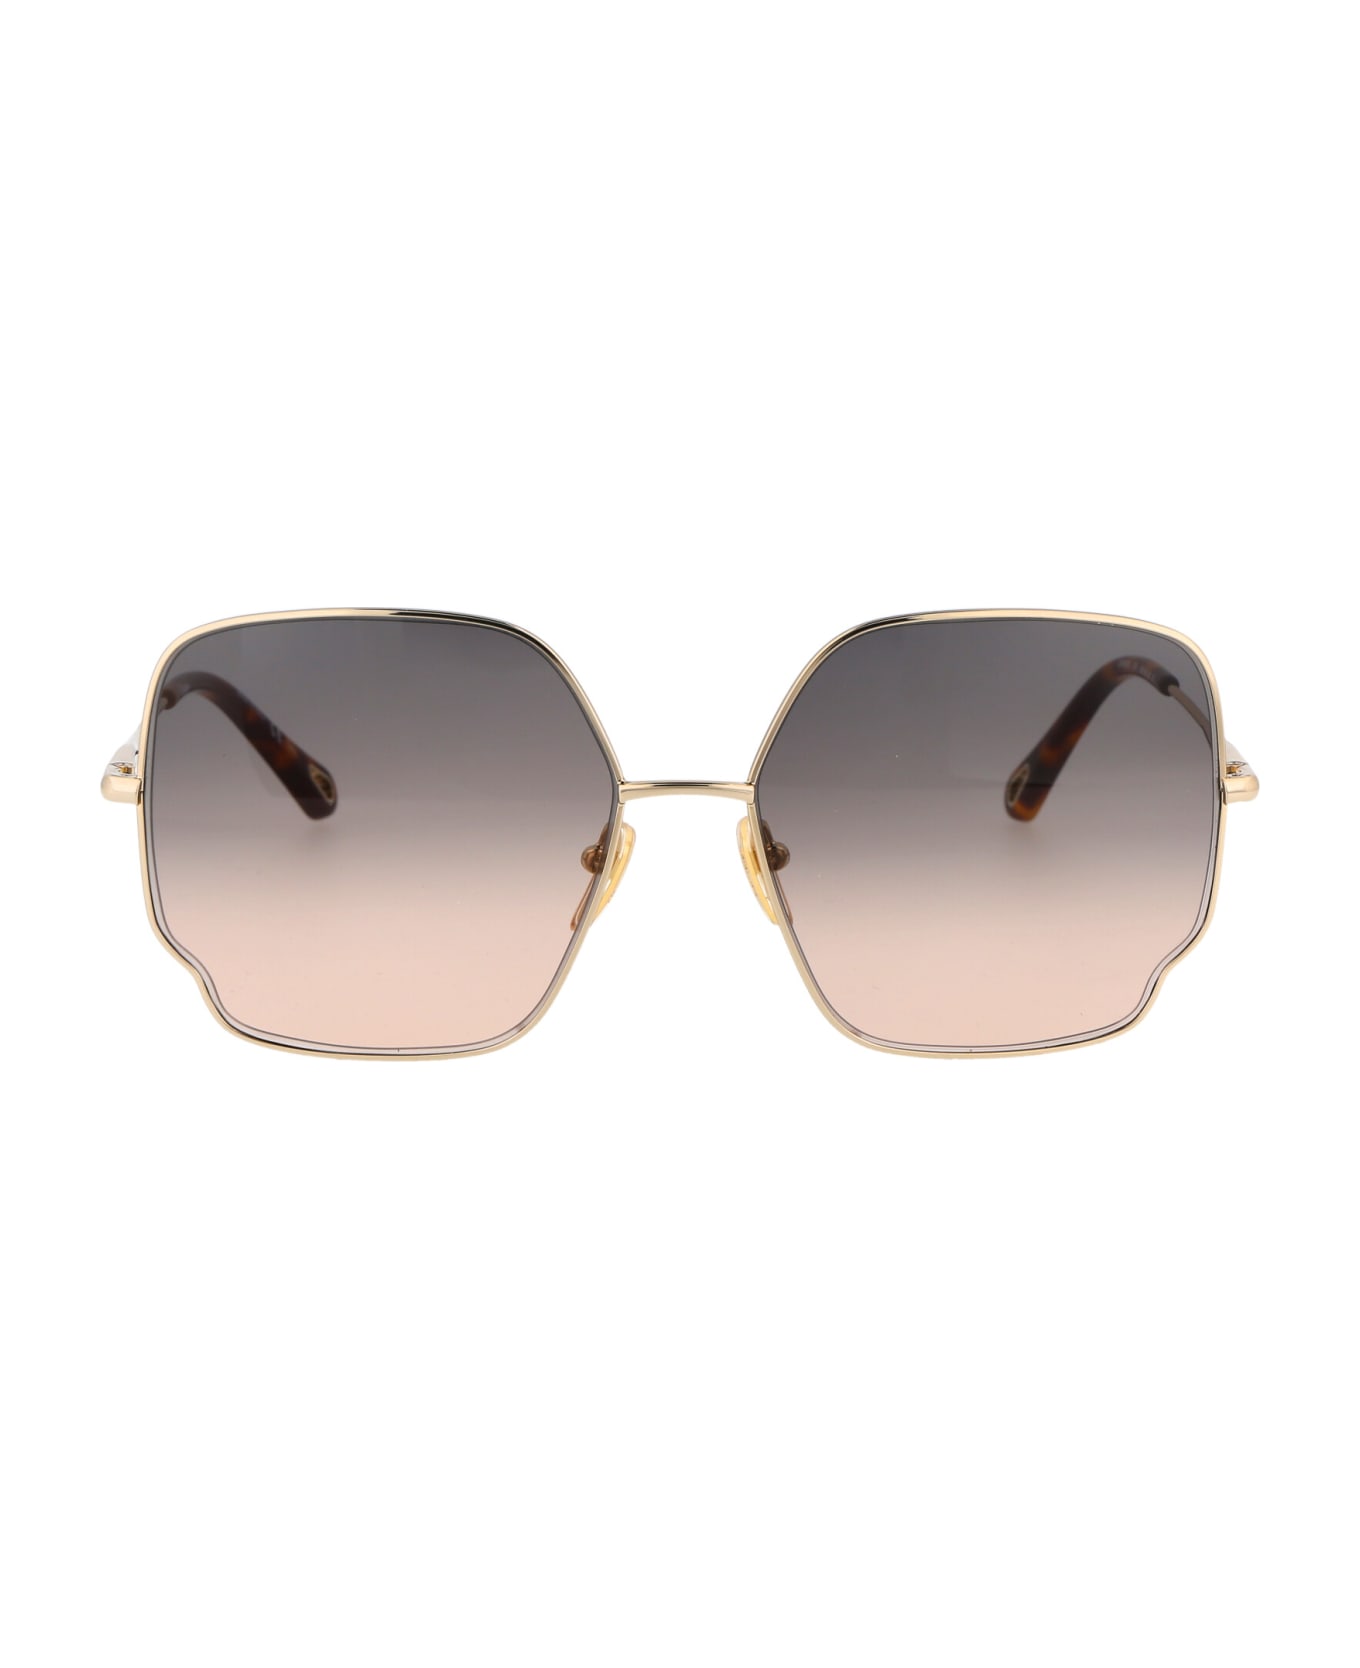 Chloé Eyewear Ch0092s Sunglasses - 001 GOLD GOLD BROWN